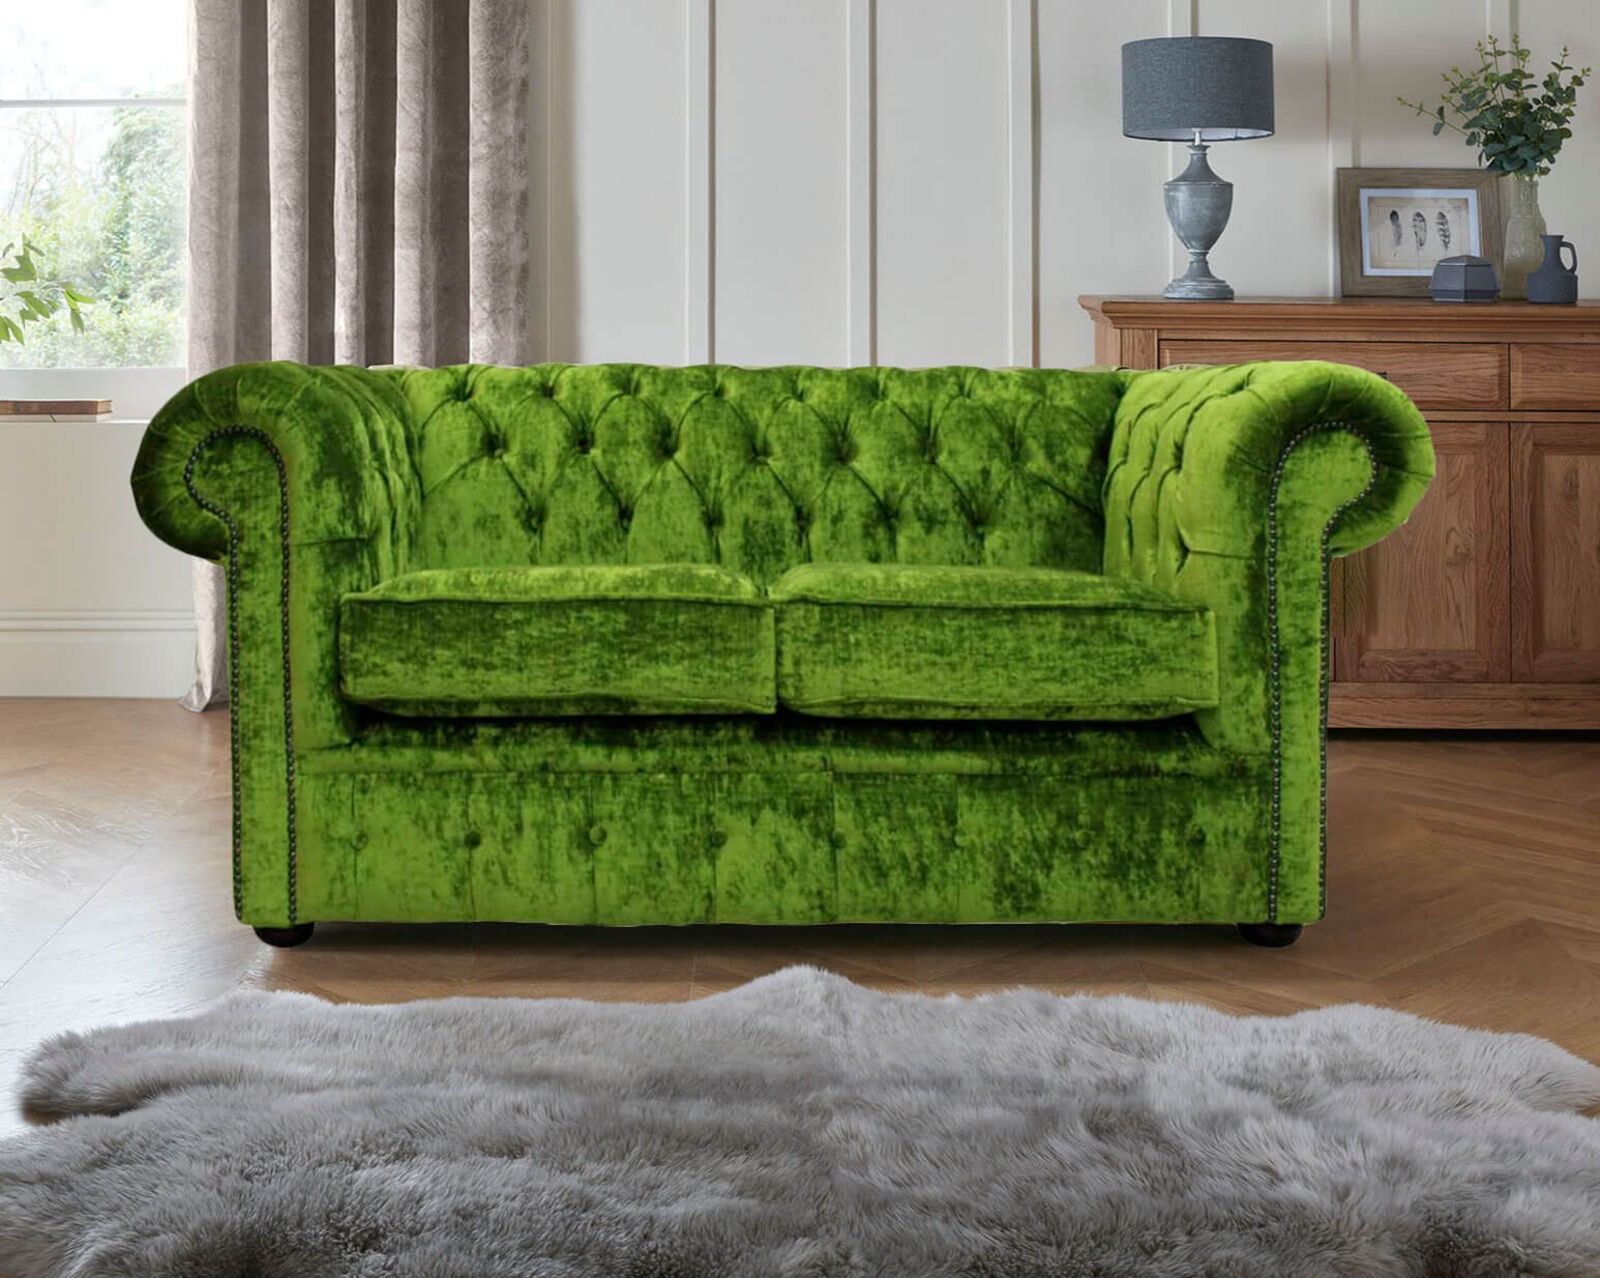 Product photograph of Chesterfield 2 Seater Settee Modena Pistachio Green Velvet Sofa Offer from Designer Sofas 4U